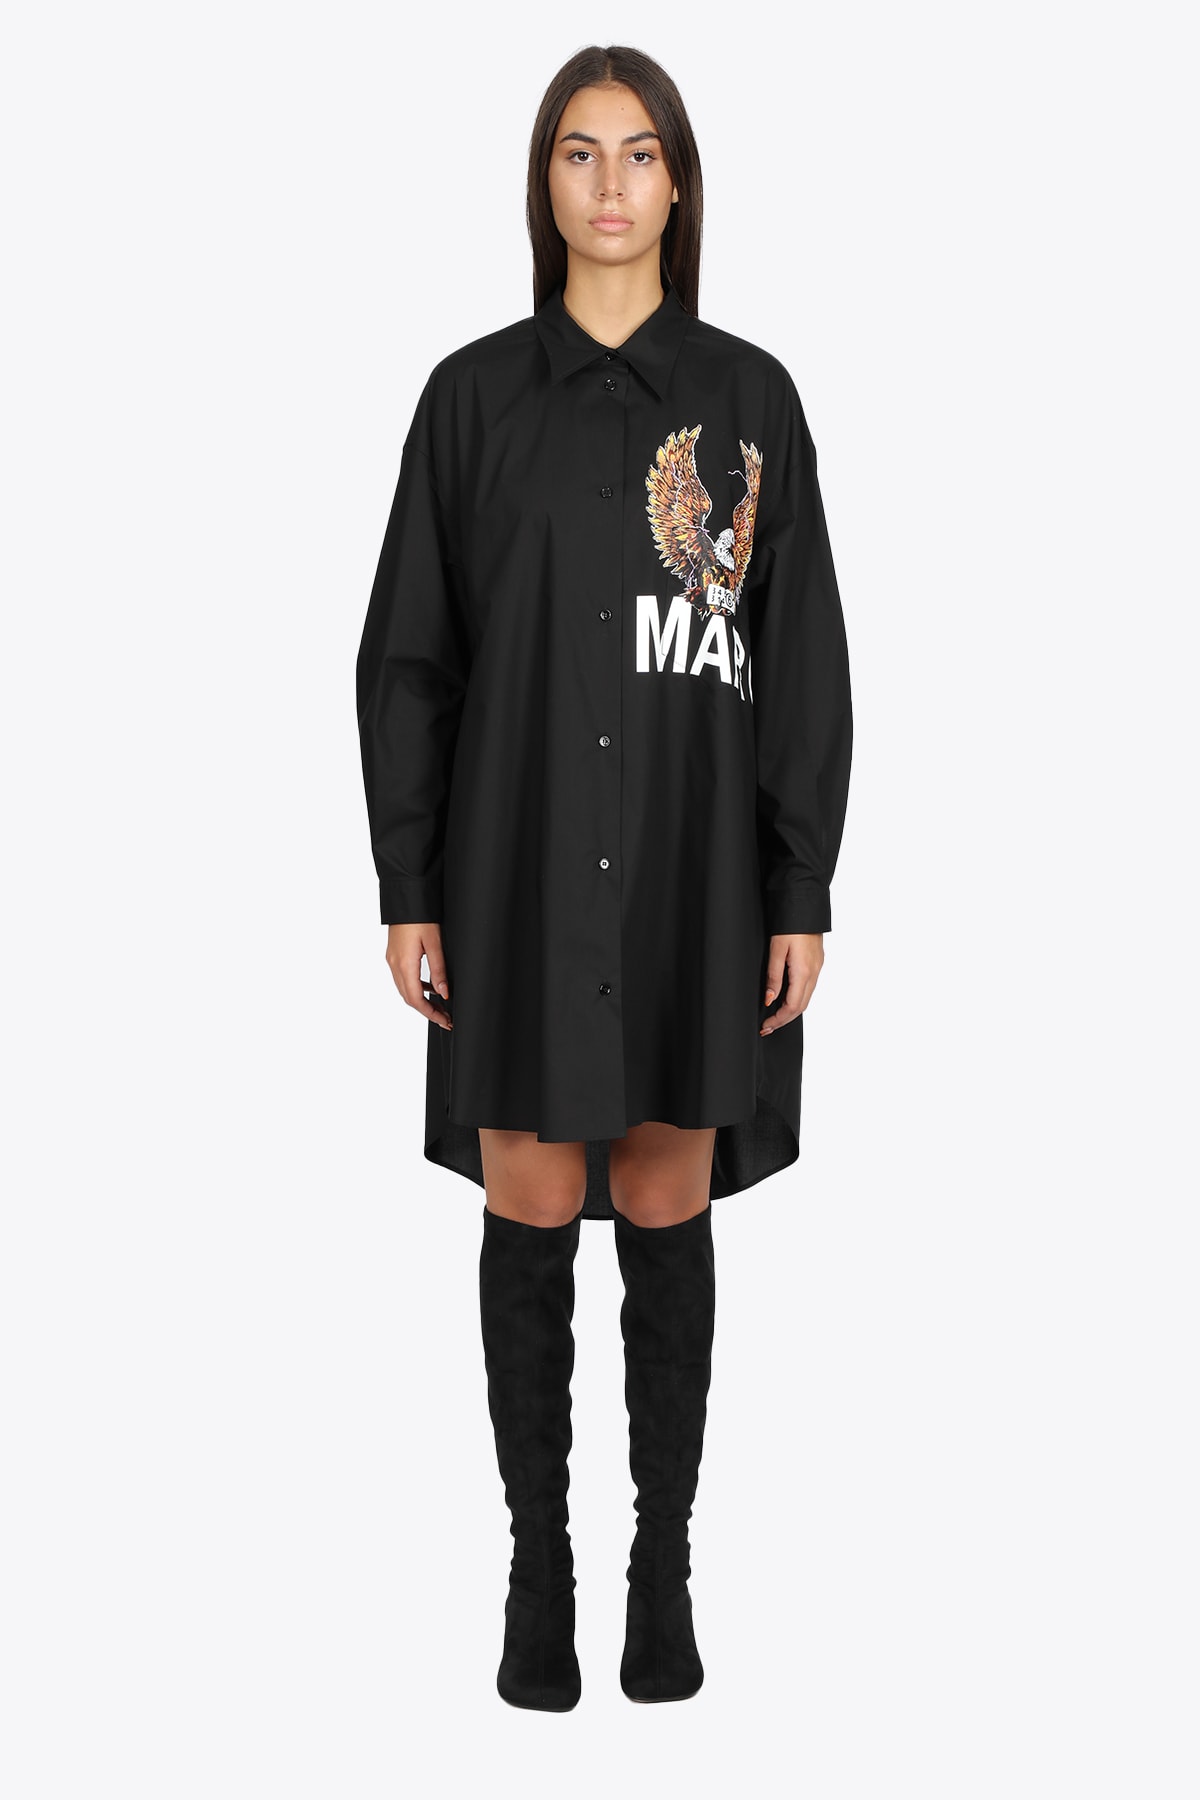 MM6 Maison Margiela Maxi Shirt-dress Black popeline dress with eagle print